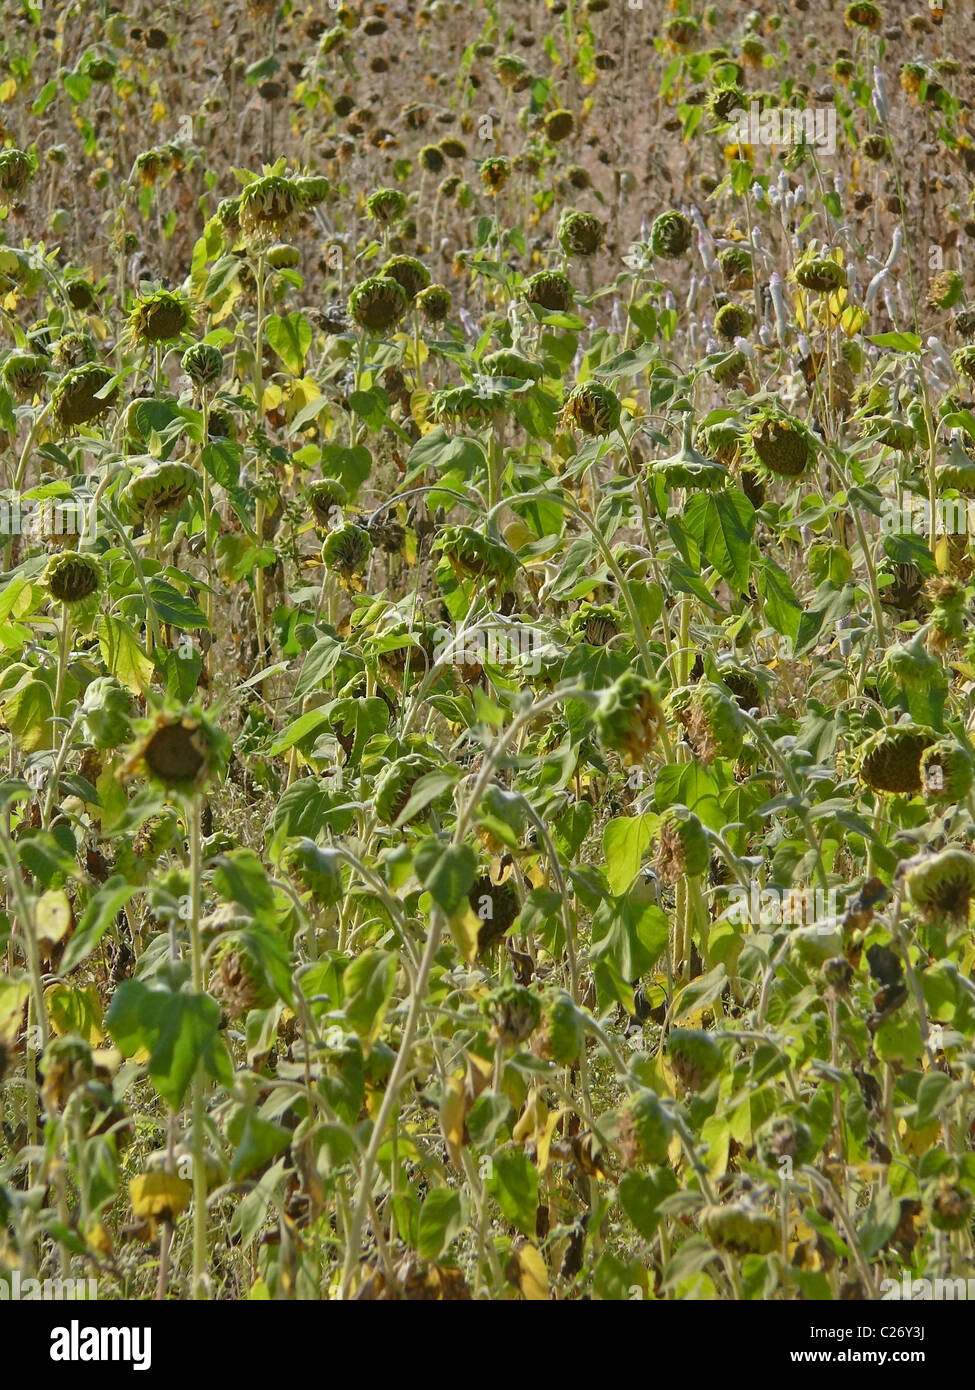 Field of Sunflowers, Helianthus annuus L., Helianthus aridus Rydb., Helianthus lenticularis Dougl. ex Lindl. Stock Photo